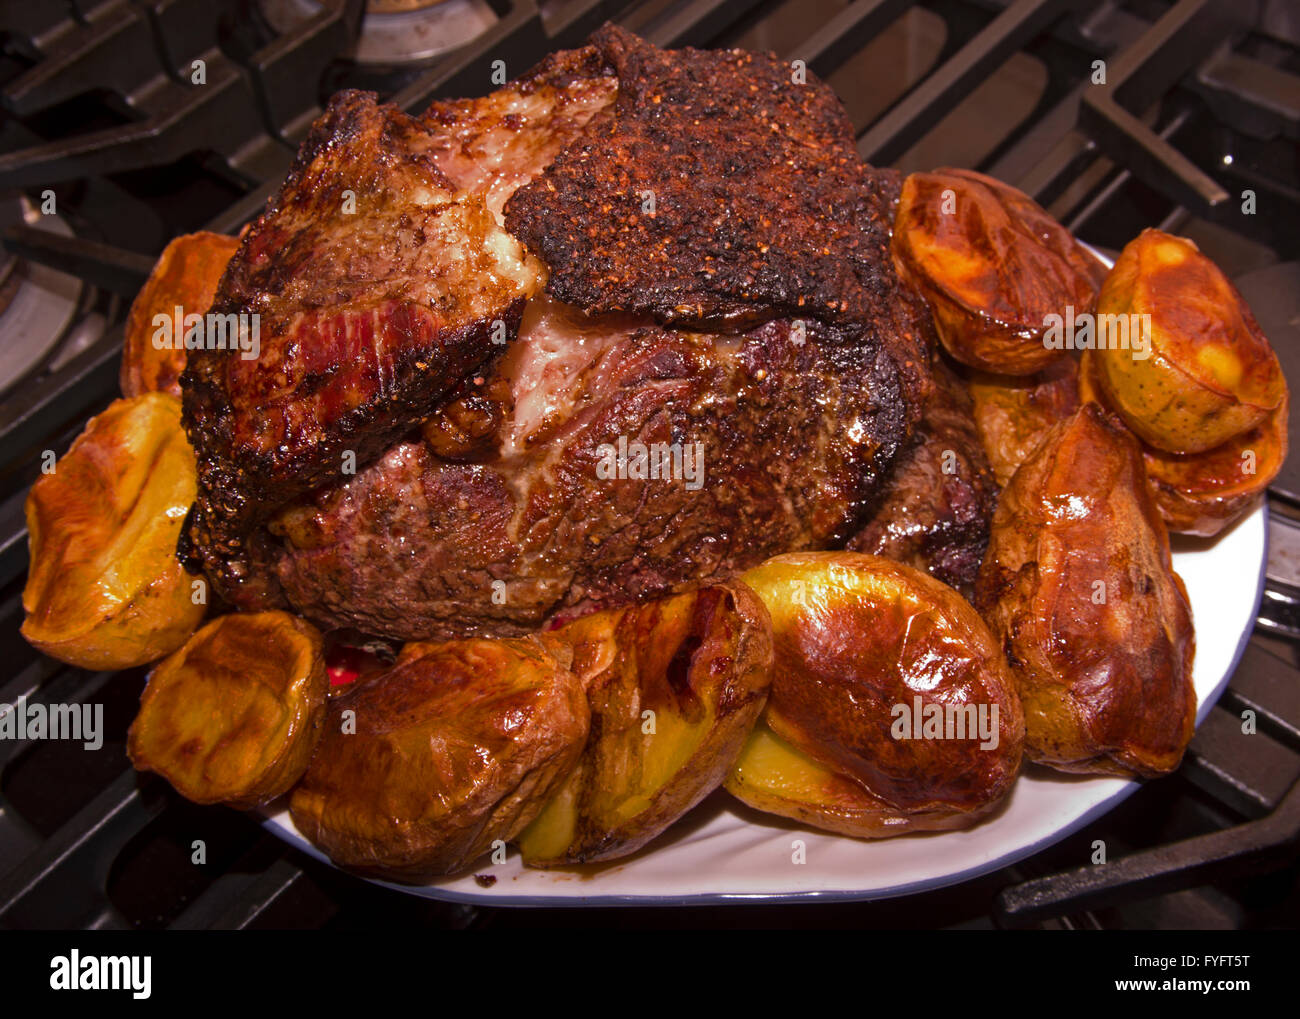 Roasted Prime Rib Roast with roasted potatoes Stock Photo